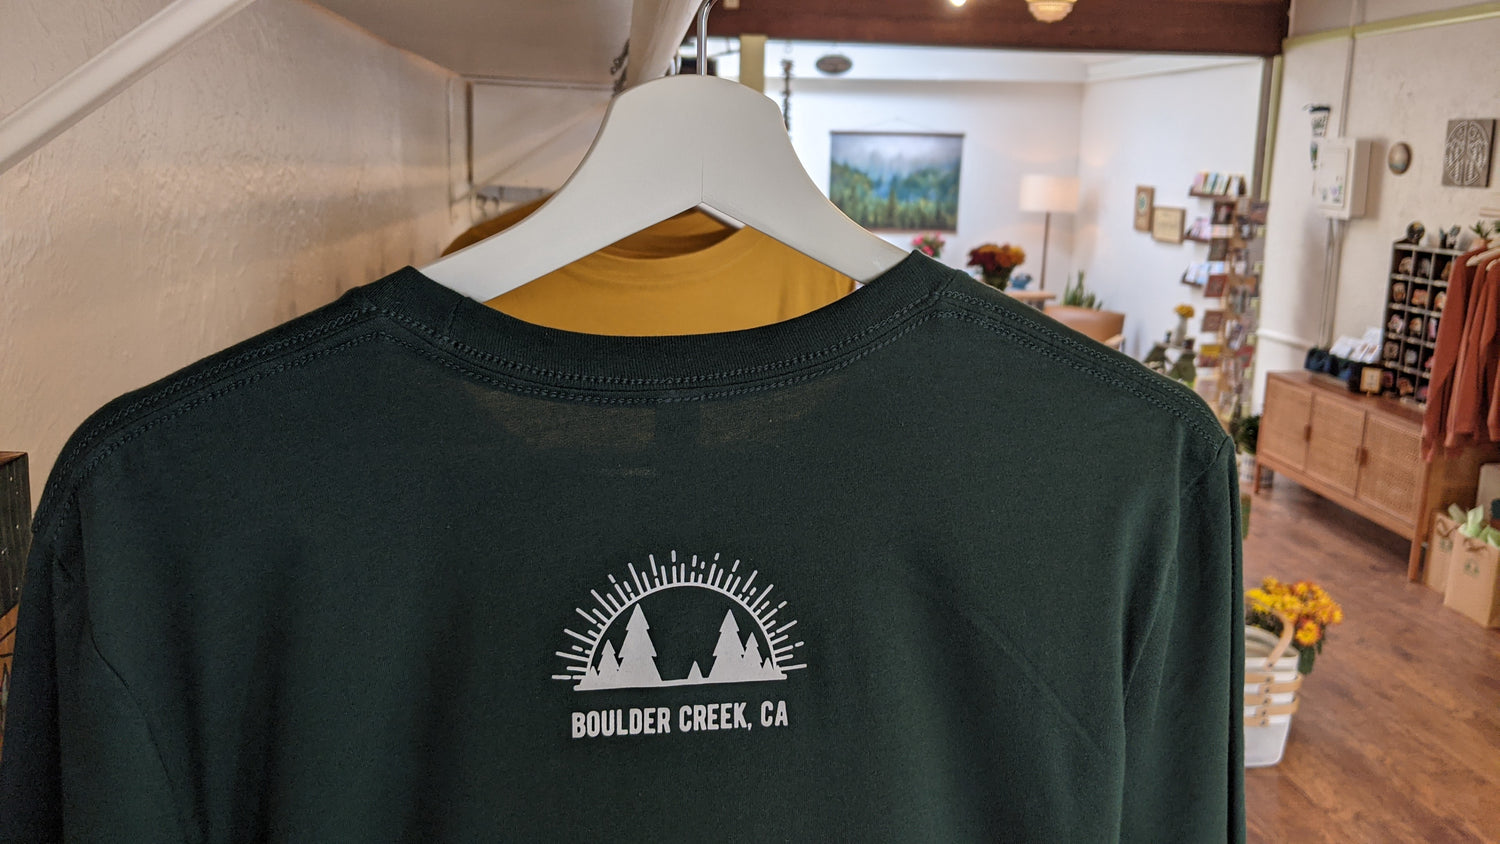 Green shirt back with Boulder Creek, CA and Present logomark